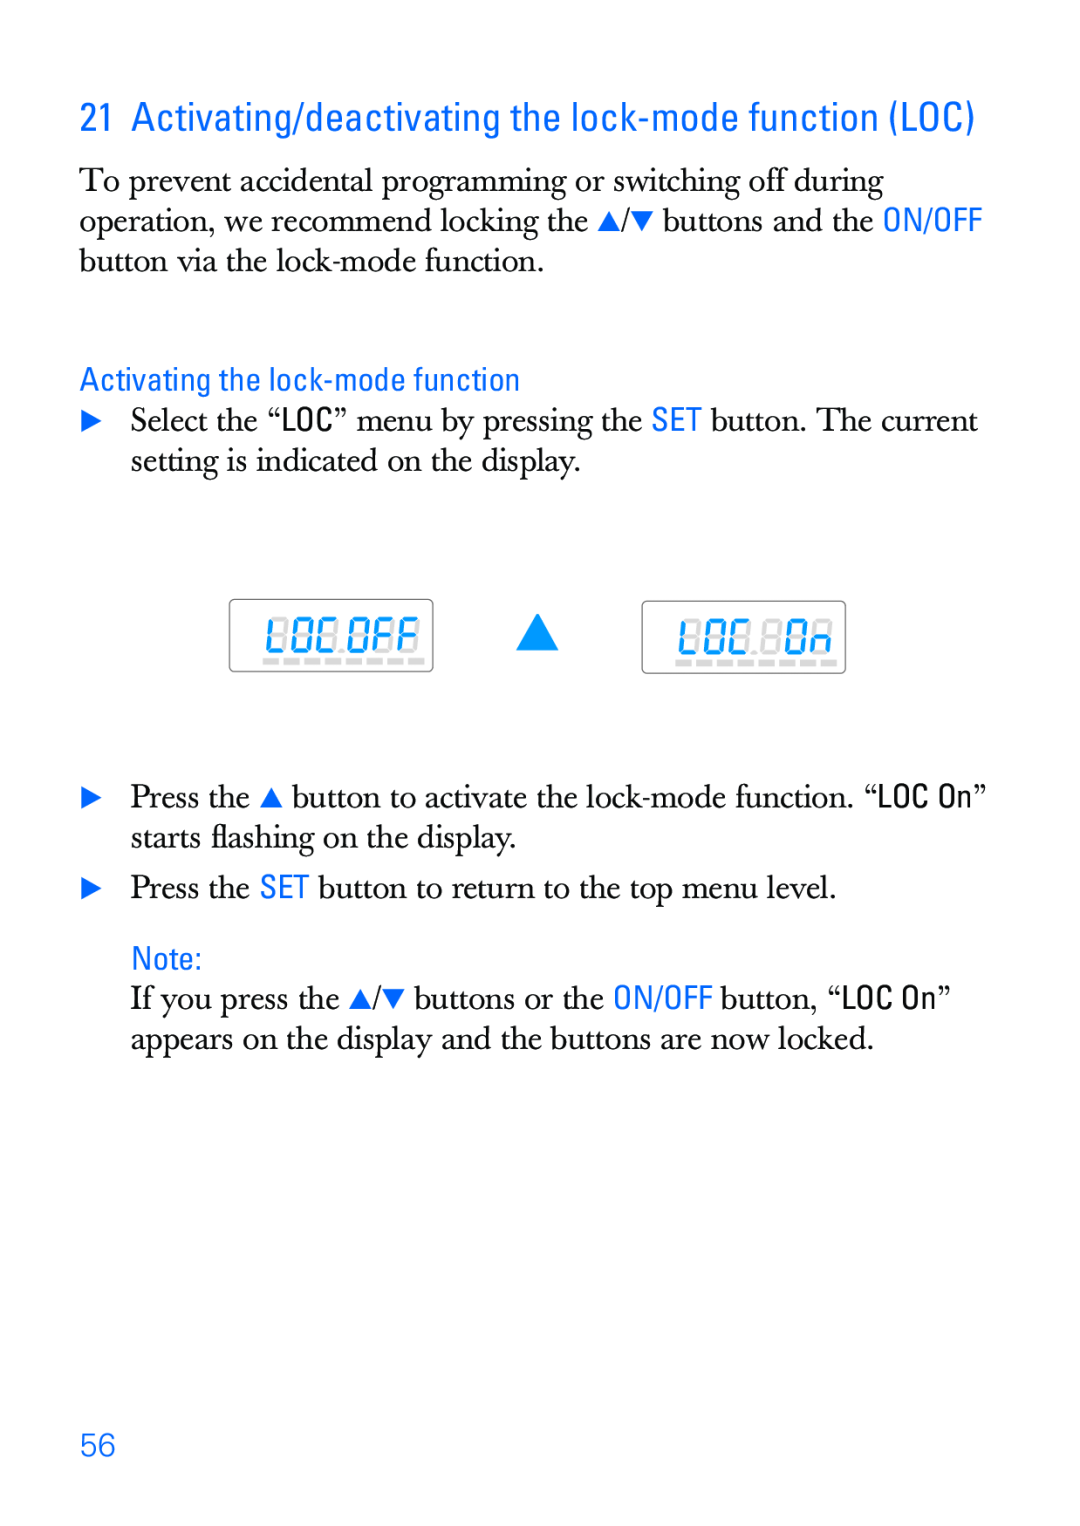 Sennheiser SKP 30 manual Activating/deactivating the lock-mode function LOC, Activating the lock-mode function 